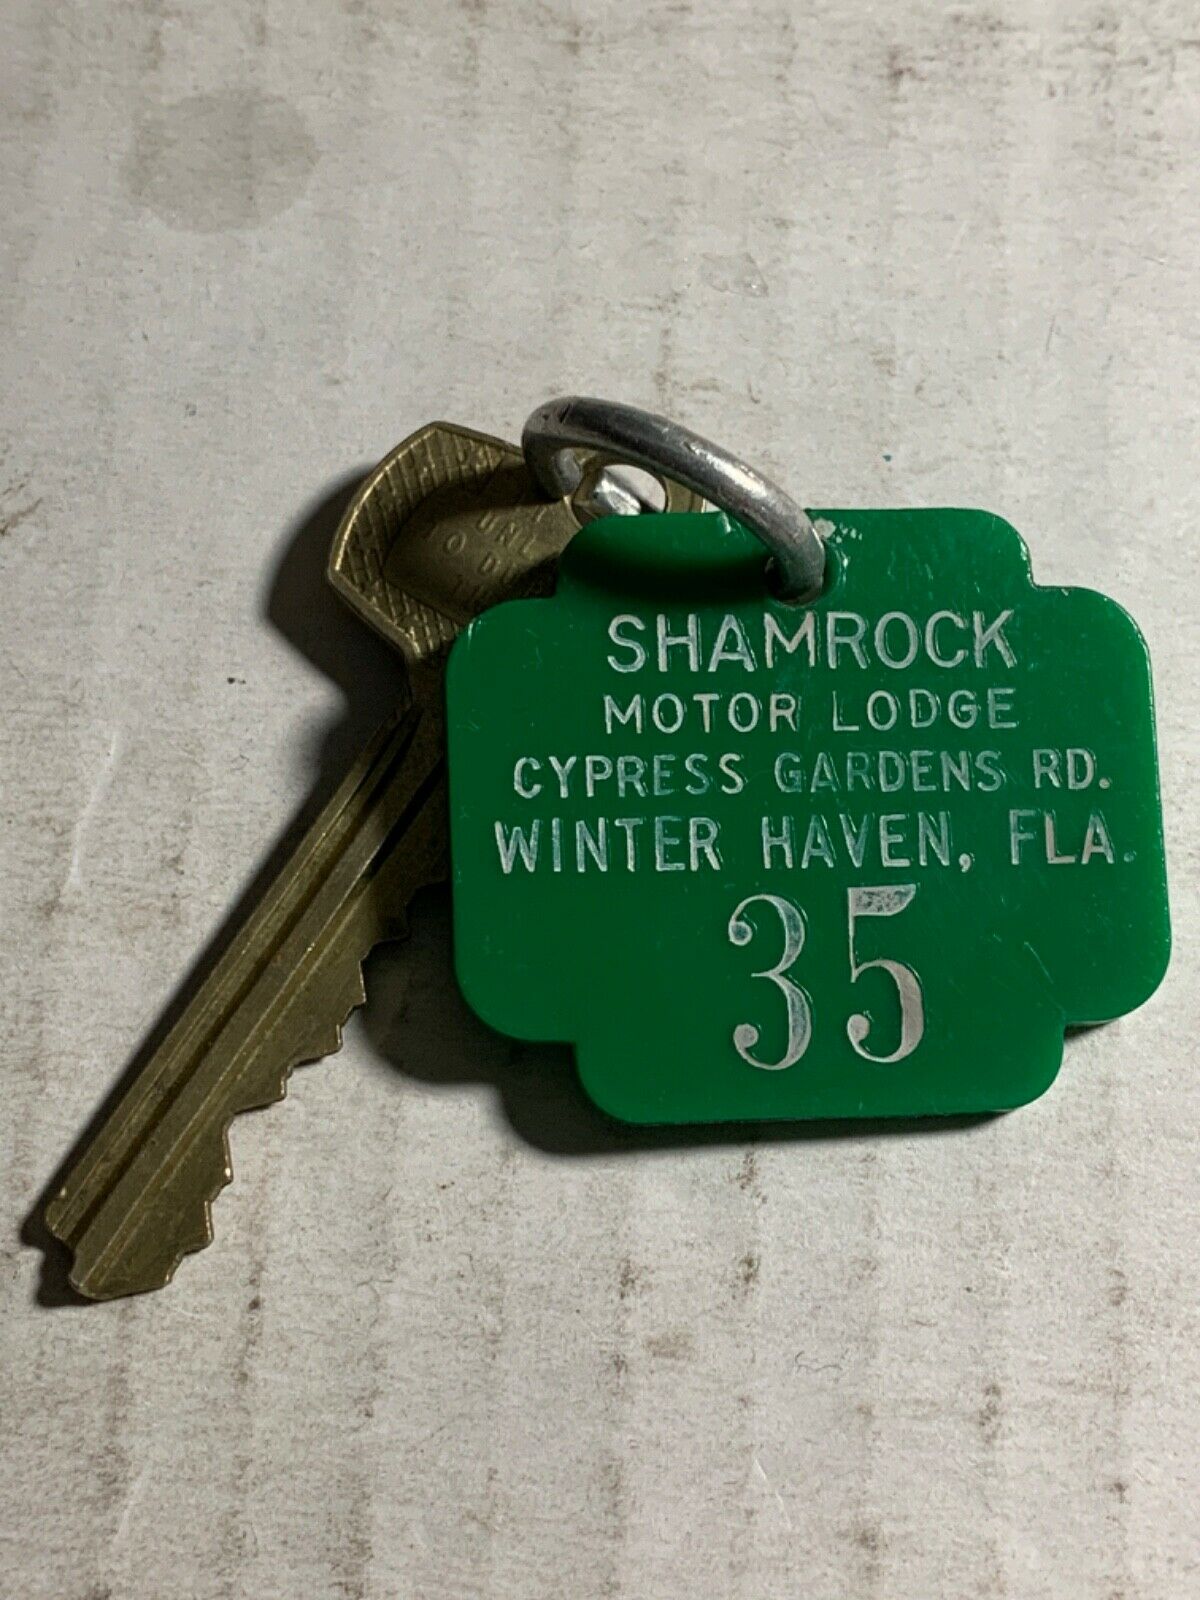 Shamrock Motor Lodge Hotel Motel Key Fob & Key Winter Haven Florida #35 Rare